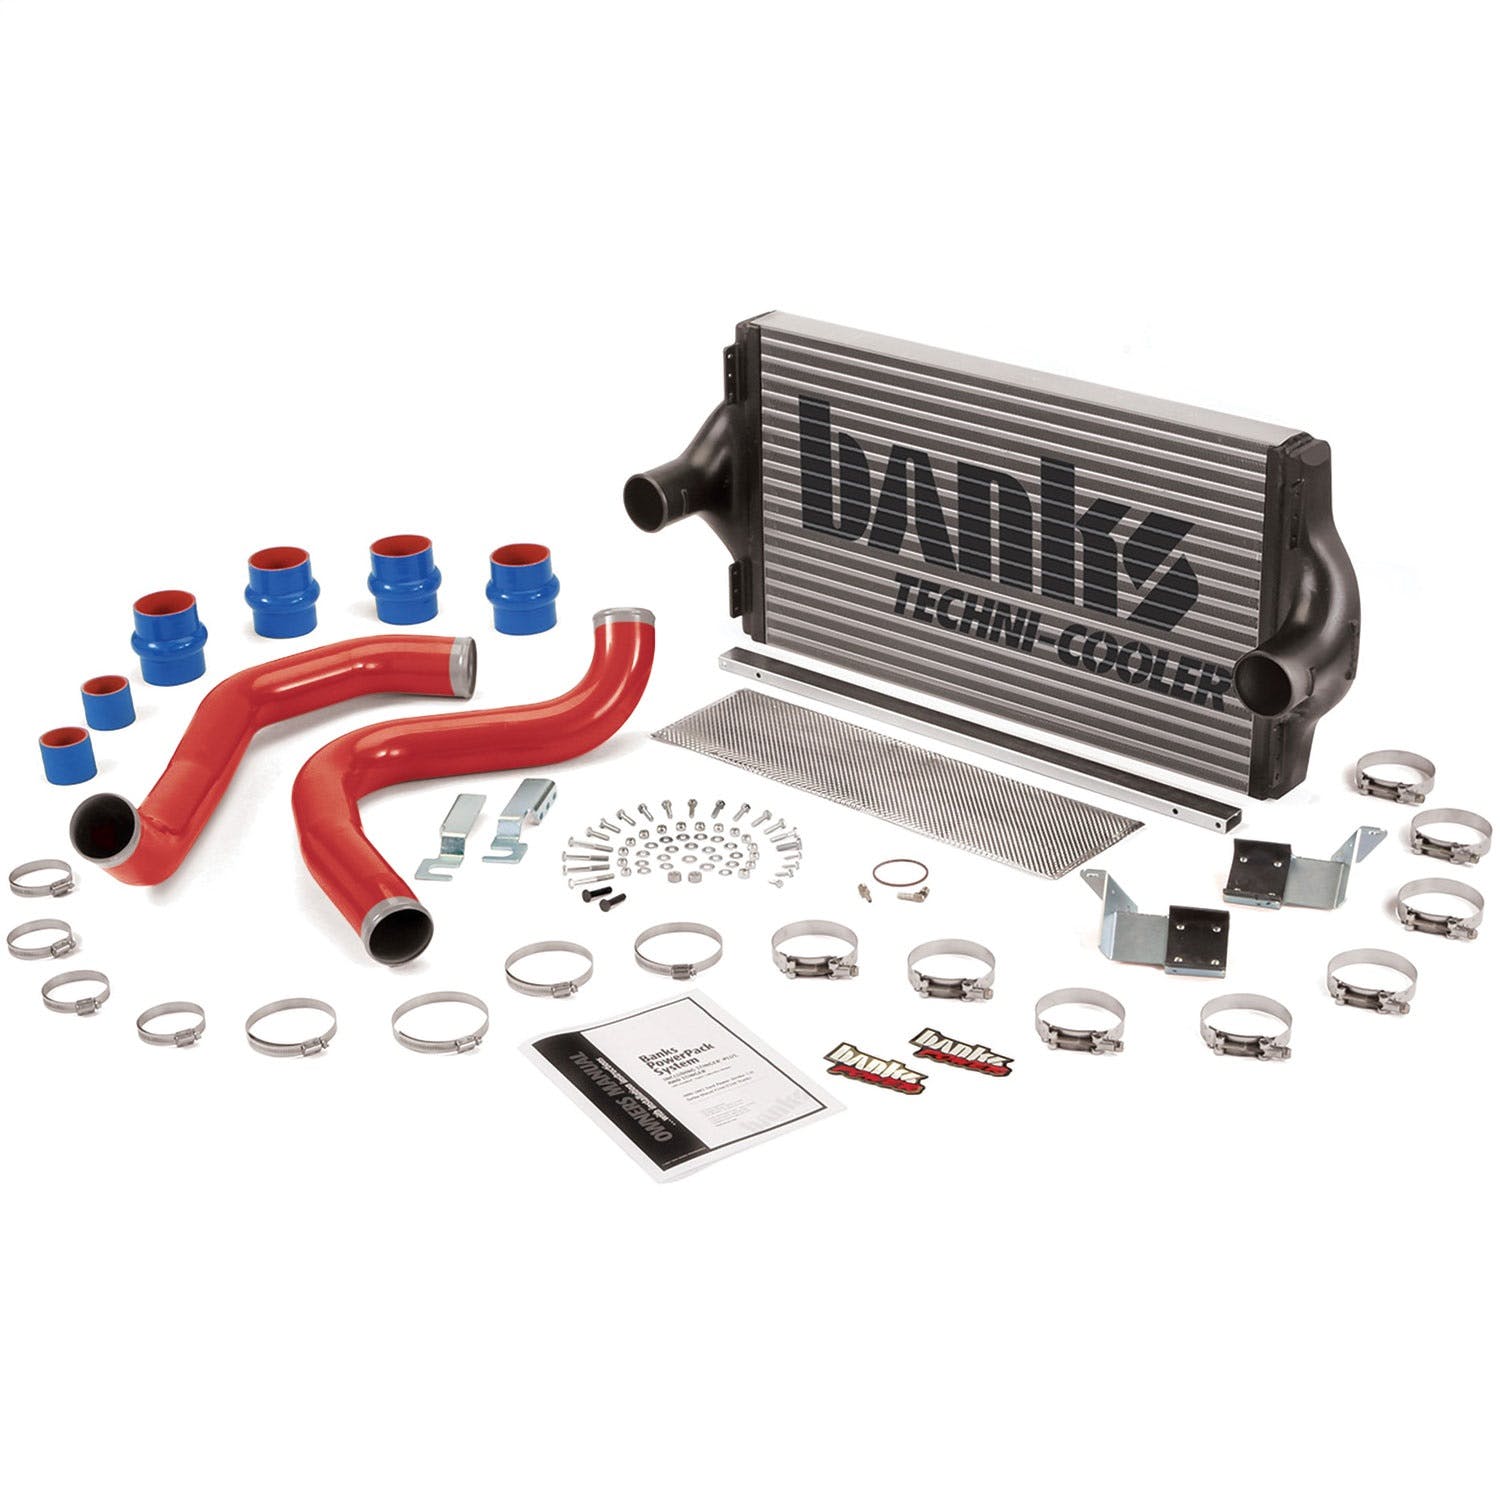 Banks Power 25973 Techni-Cooler System-1999 1/2-03 Ford 7.3L